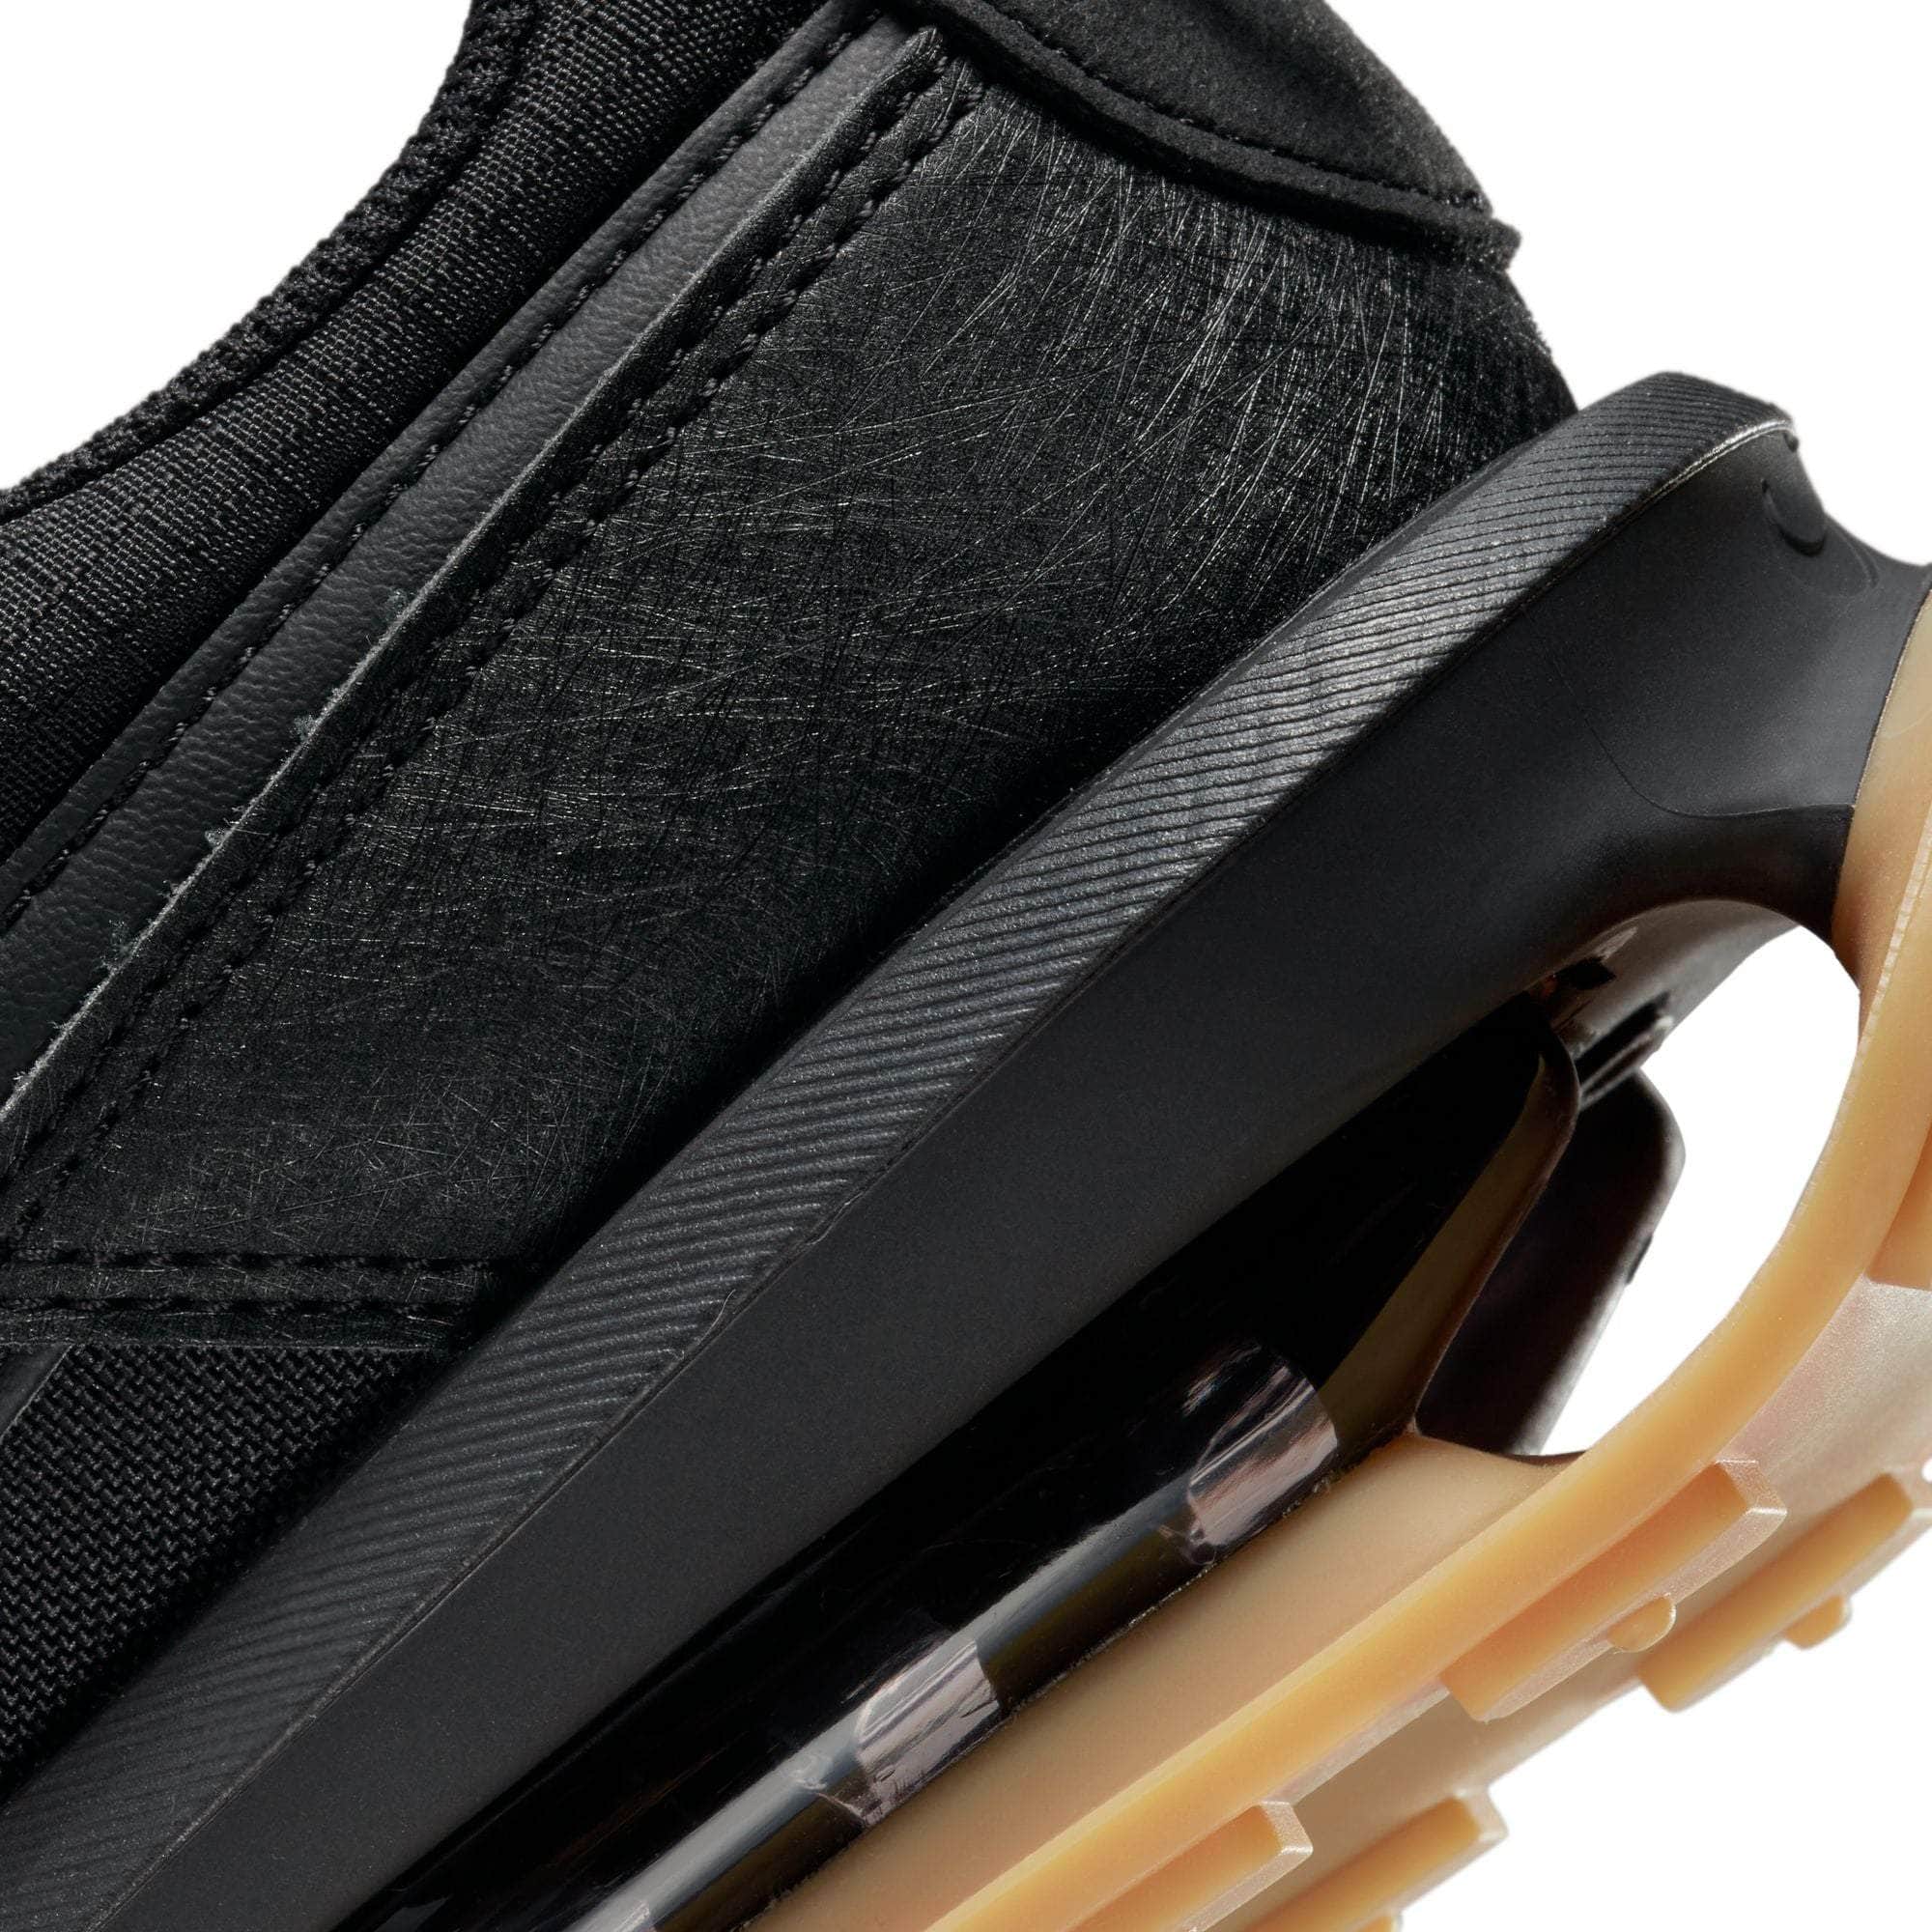 NIKE FOOTWEAR Nike Air Max Pre-Day "Black Gum" - Men's